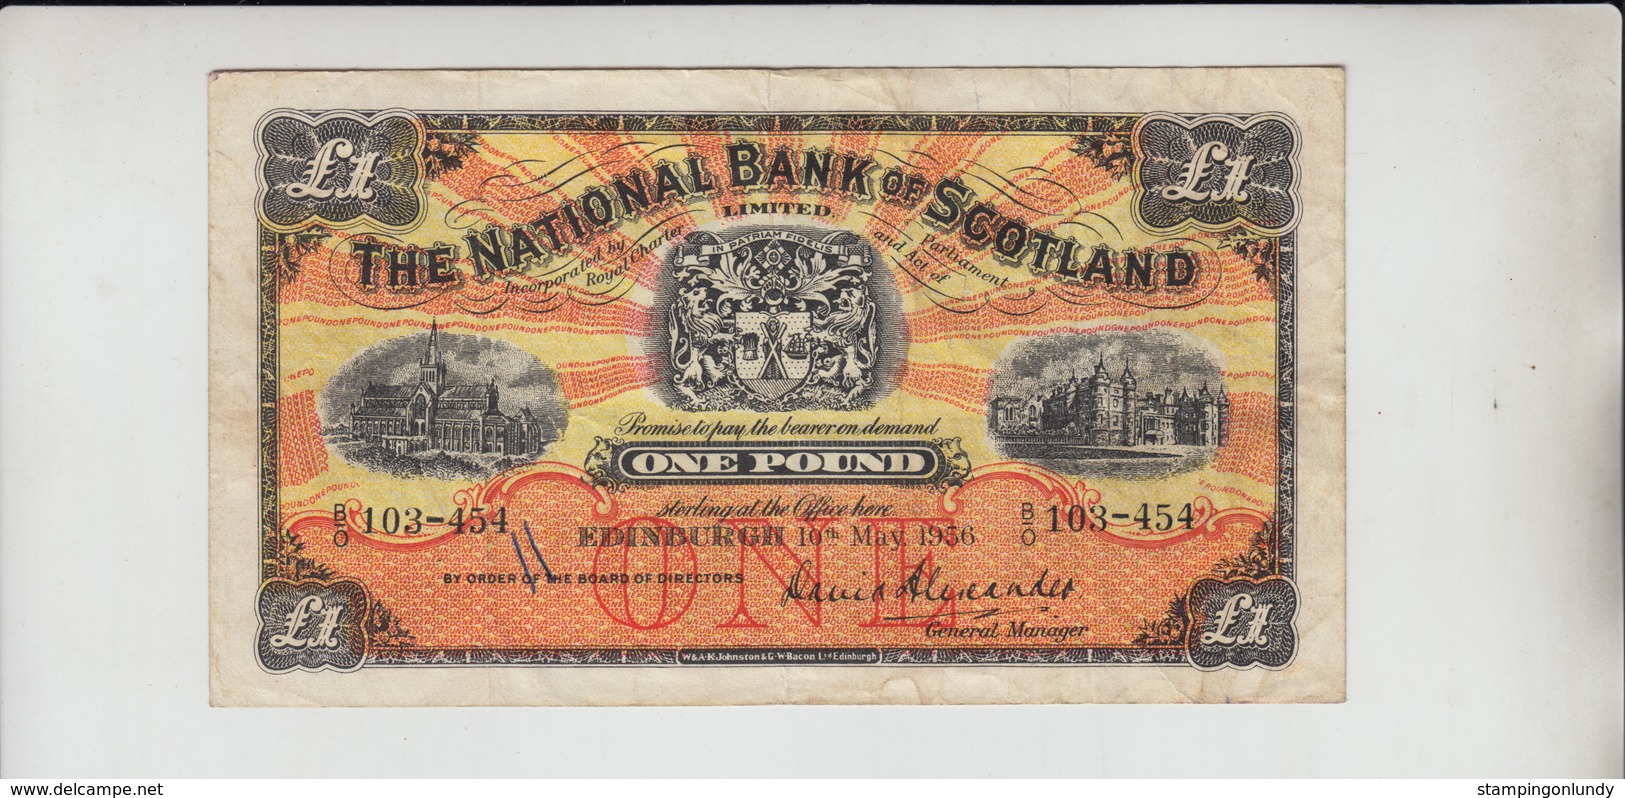 AB538. The National Bank Of Scotland Ltd £1 Banknote 10th May 1956 #B/O 103-454 FREE UK P+P - 1 Pound